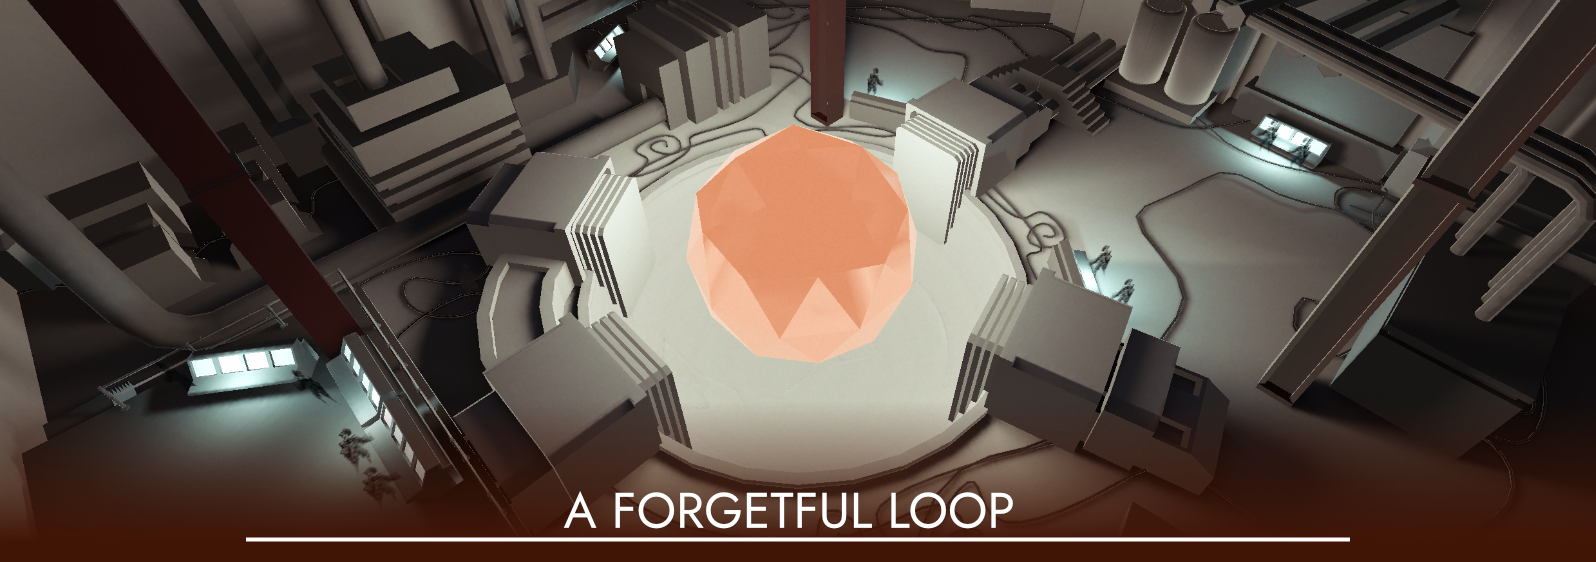 A Forgetful Loop